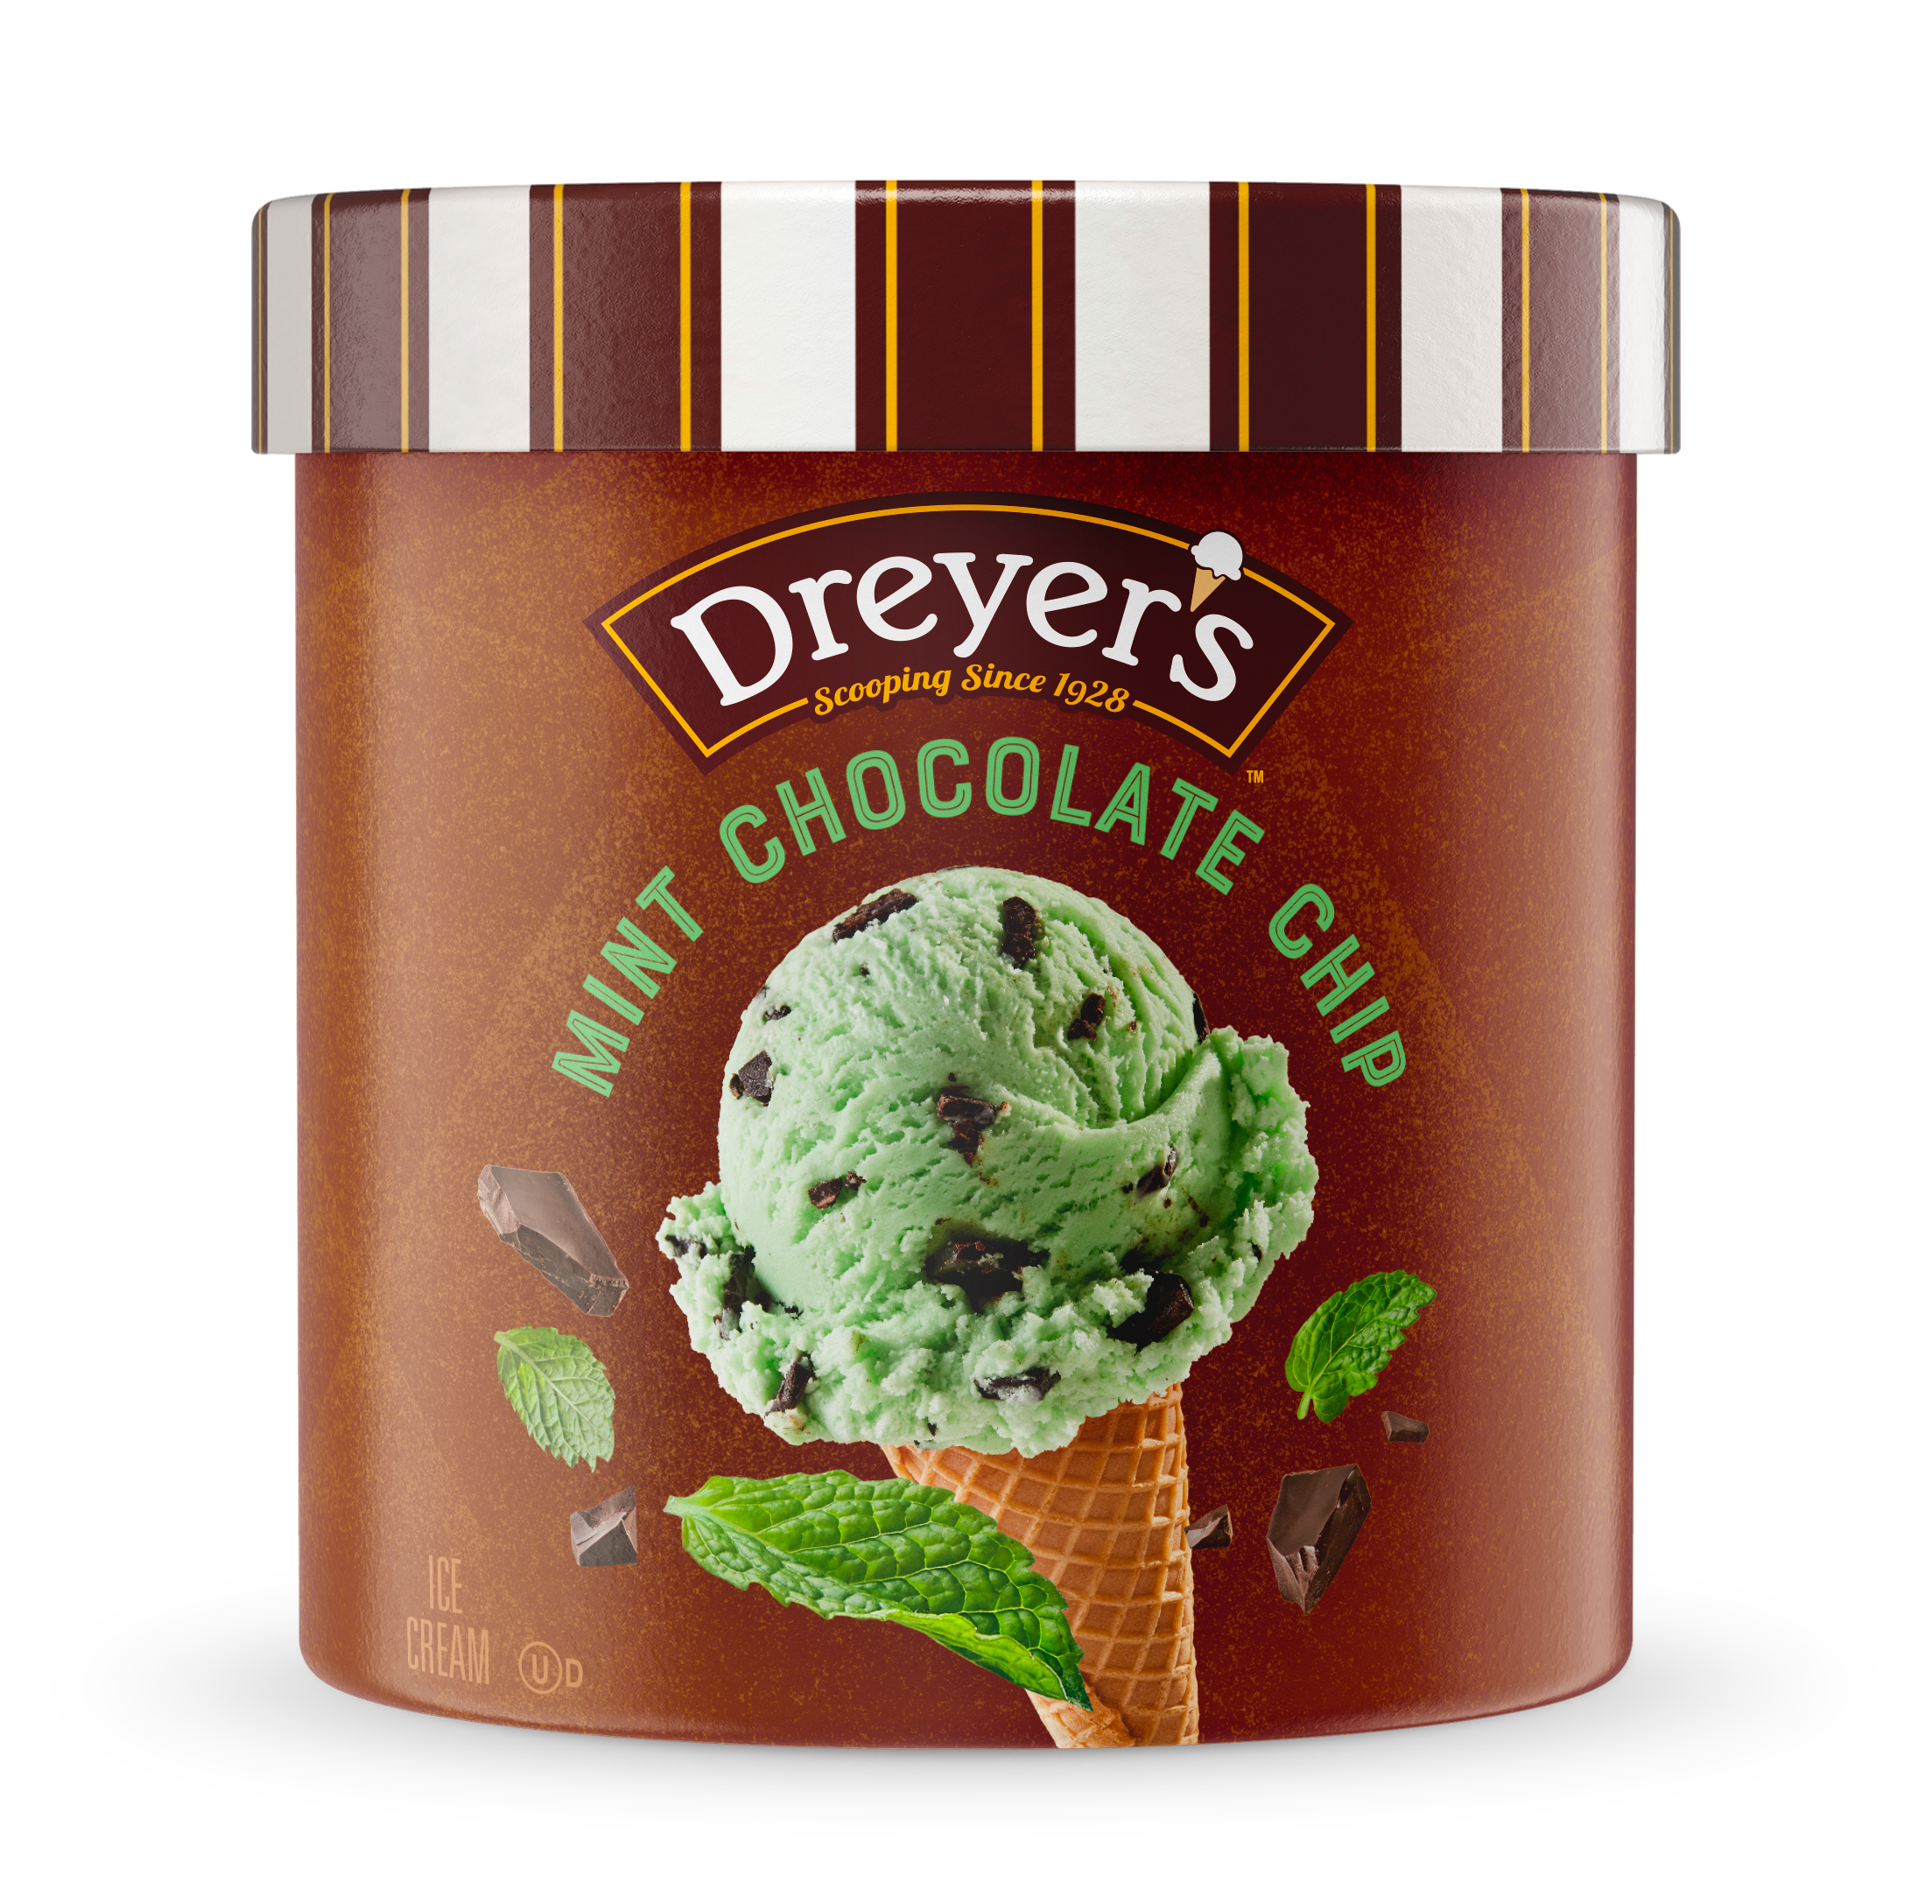 Carton of Dreyer's mint chocolate chip ice cream